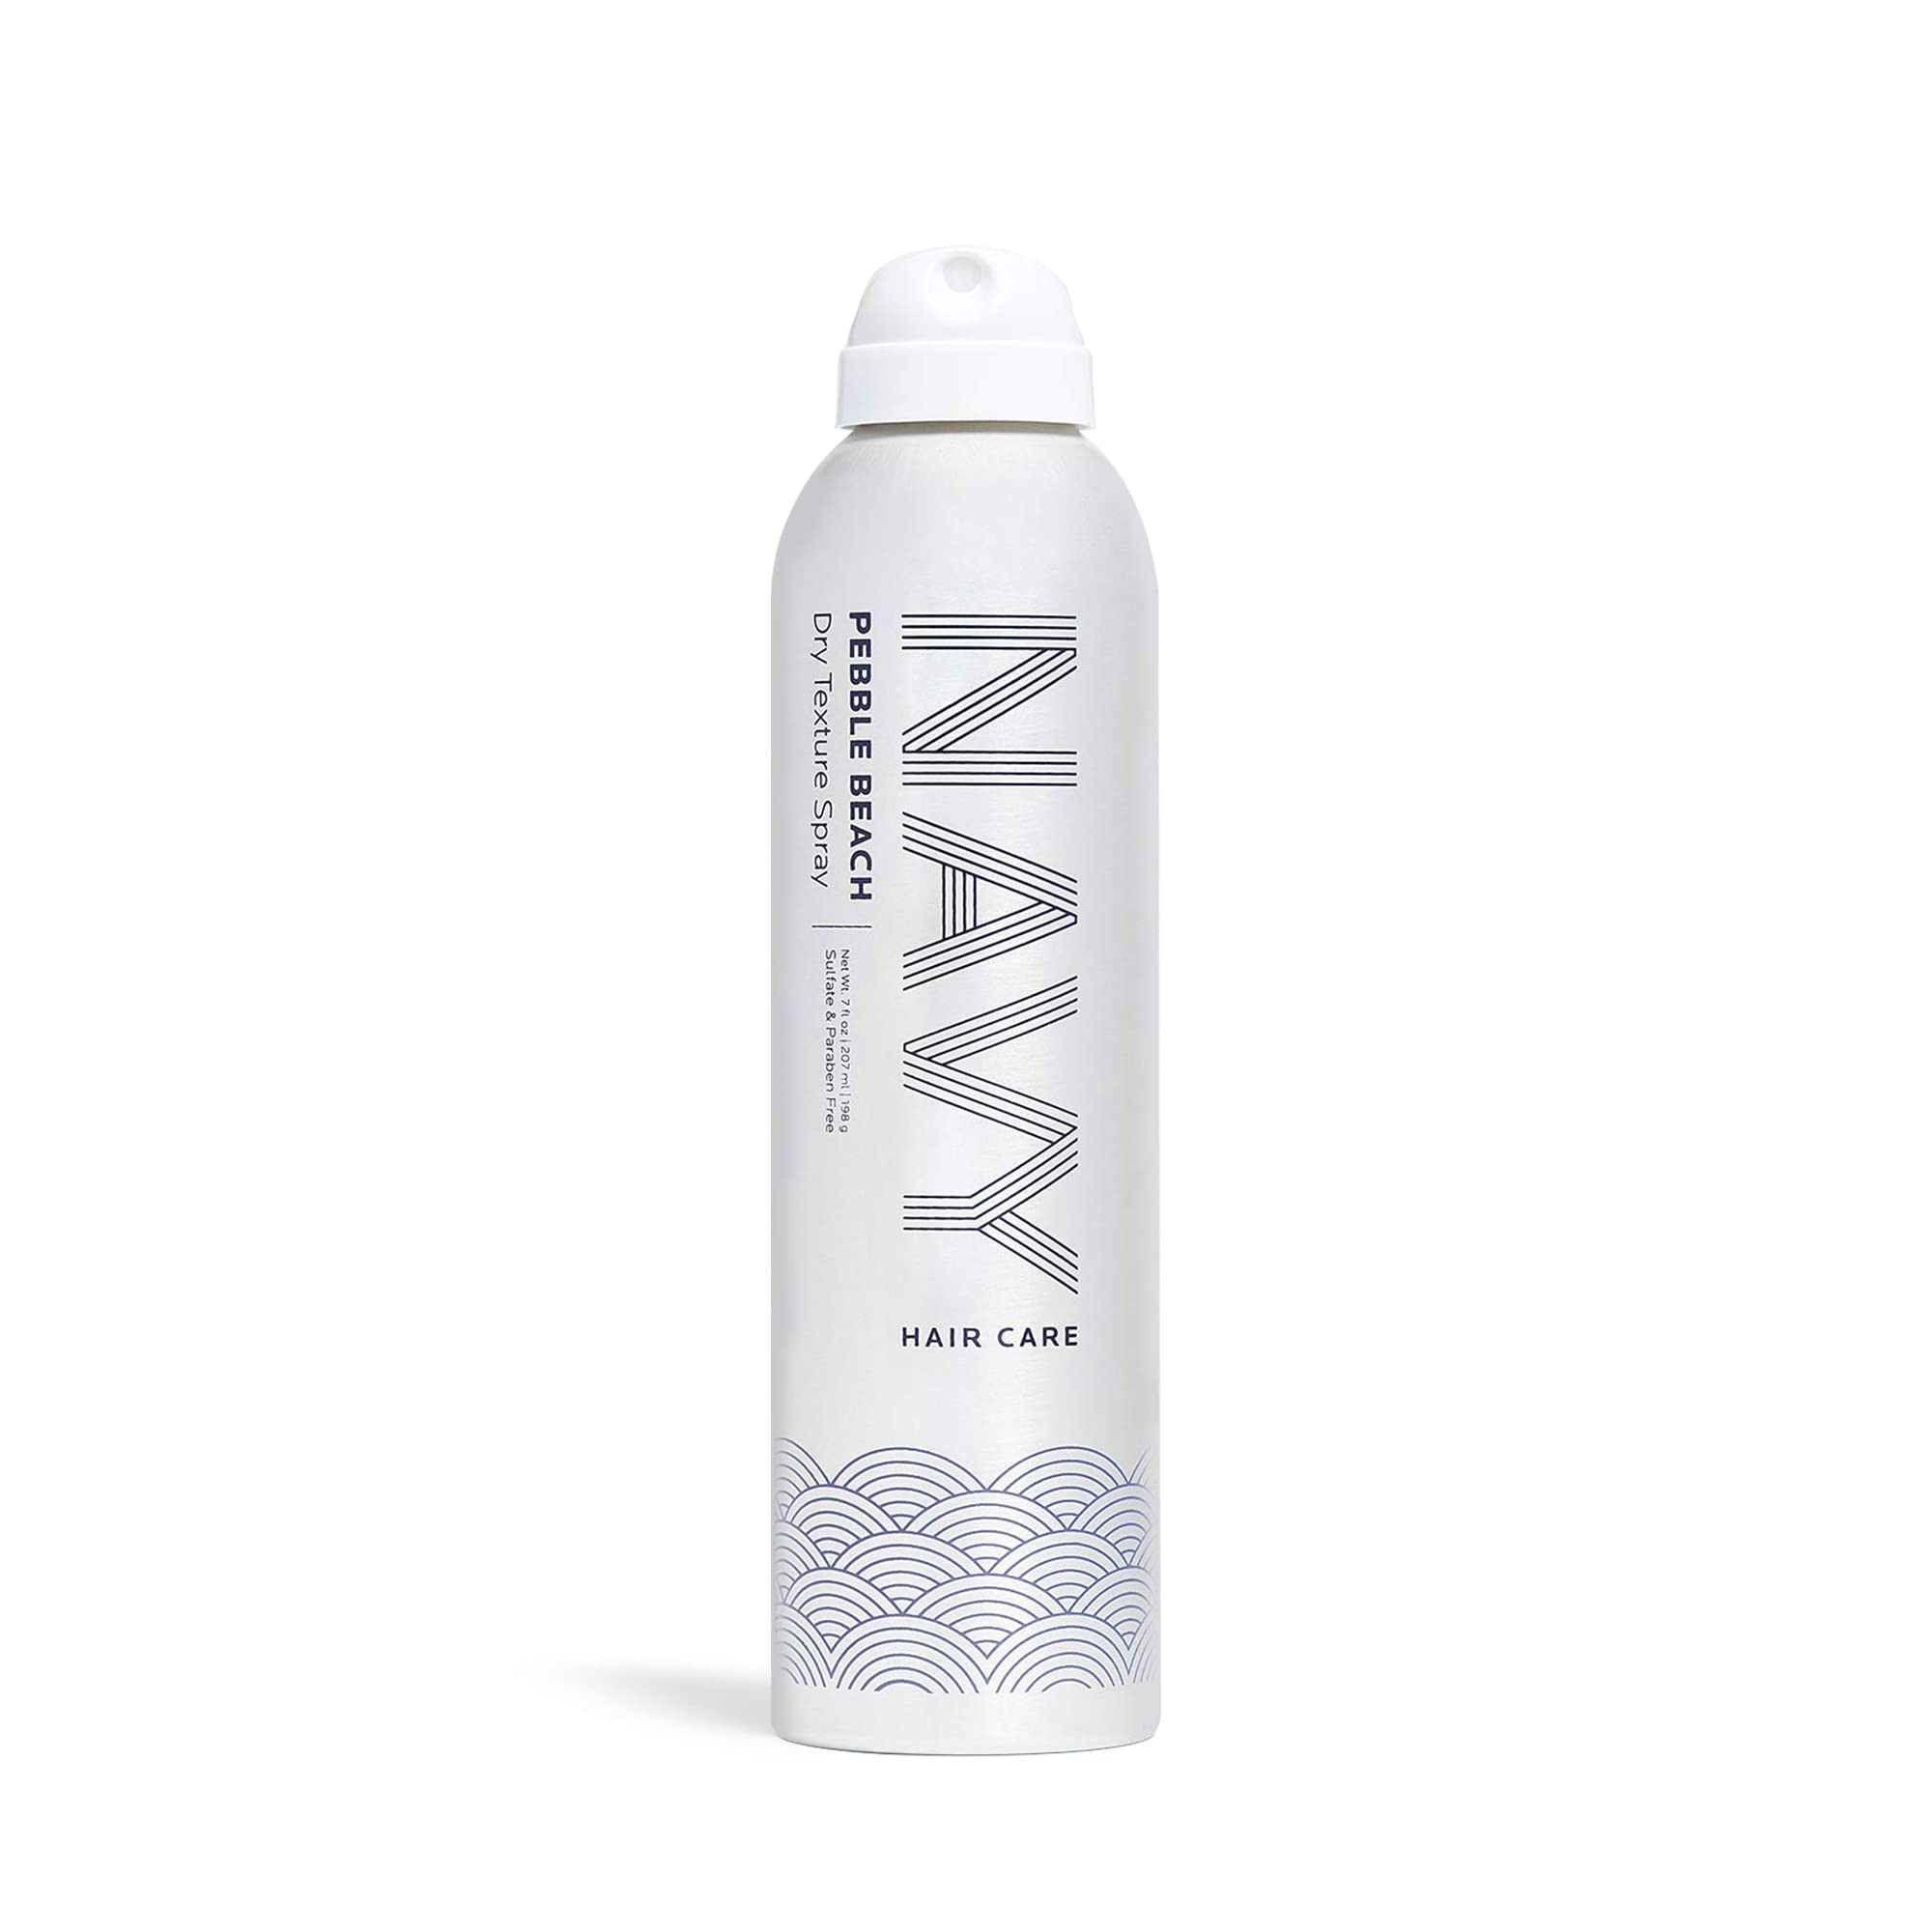  Navy Pebble Beach & Skipper Spray for Hairs, Dry Texture  Spray for Flexible Hold Hairs